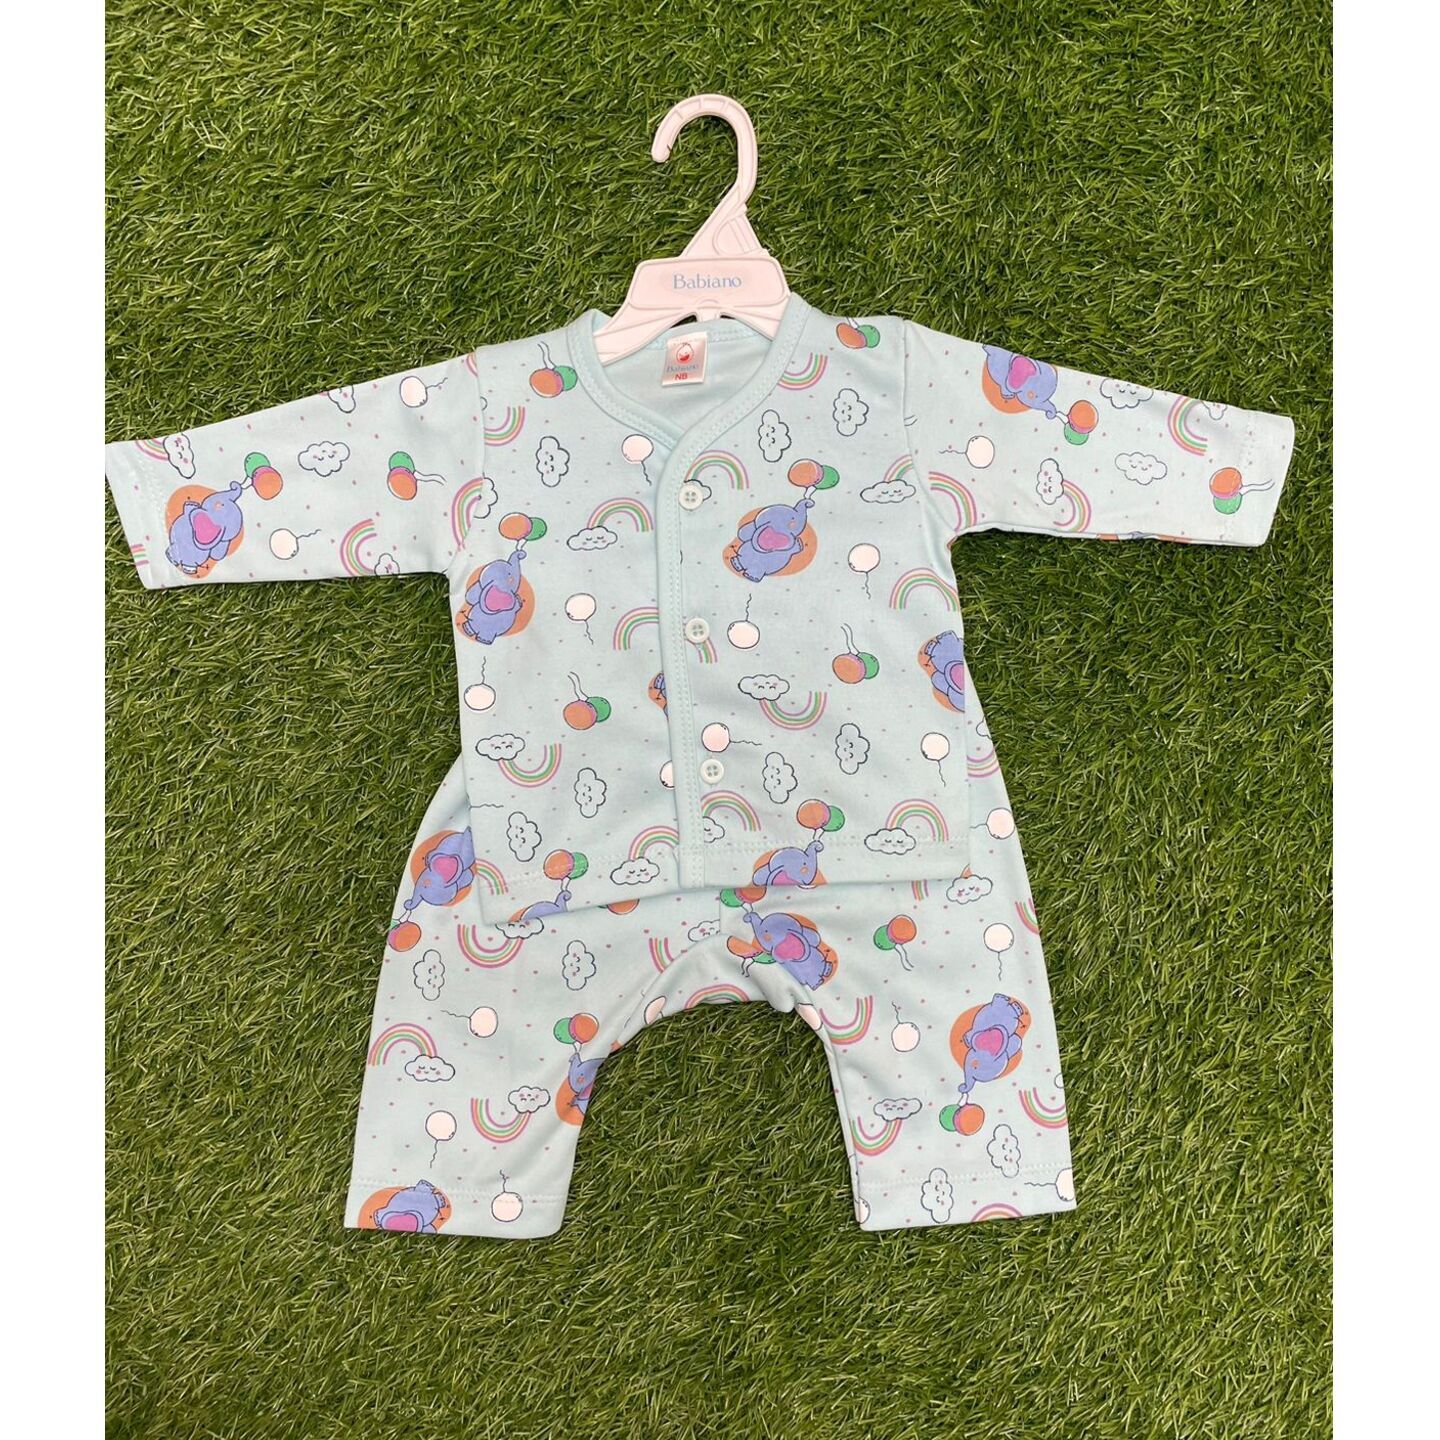 Babiano  Newborn Baby Infant Diaper Pyjama Sets Rs 495 